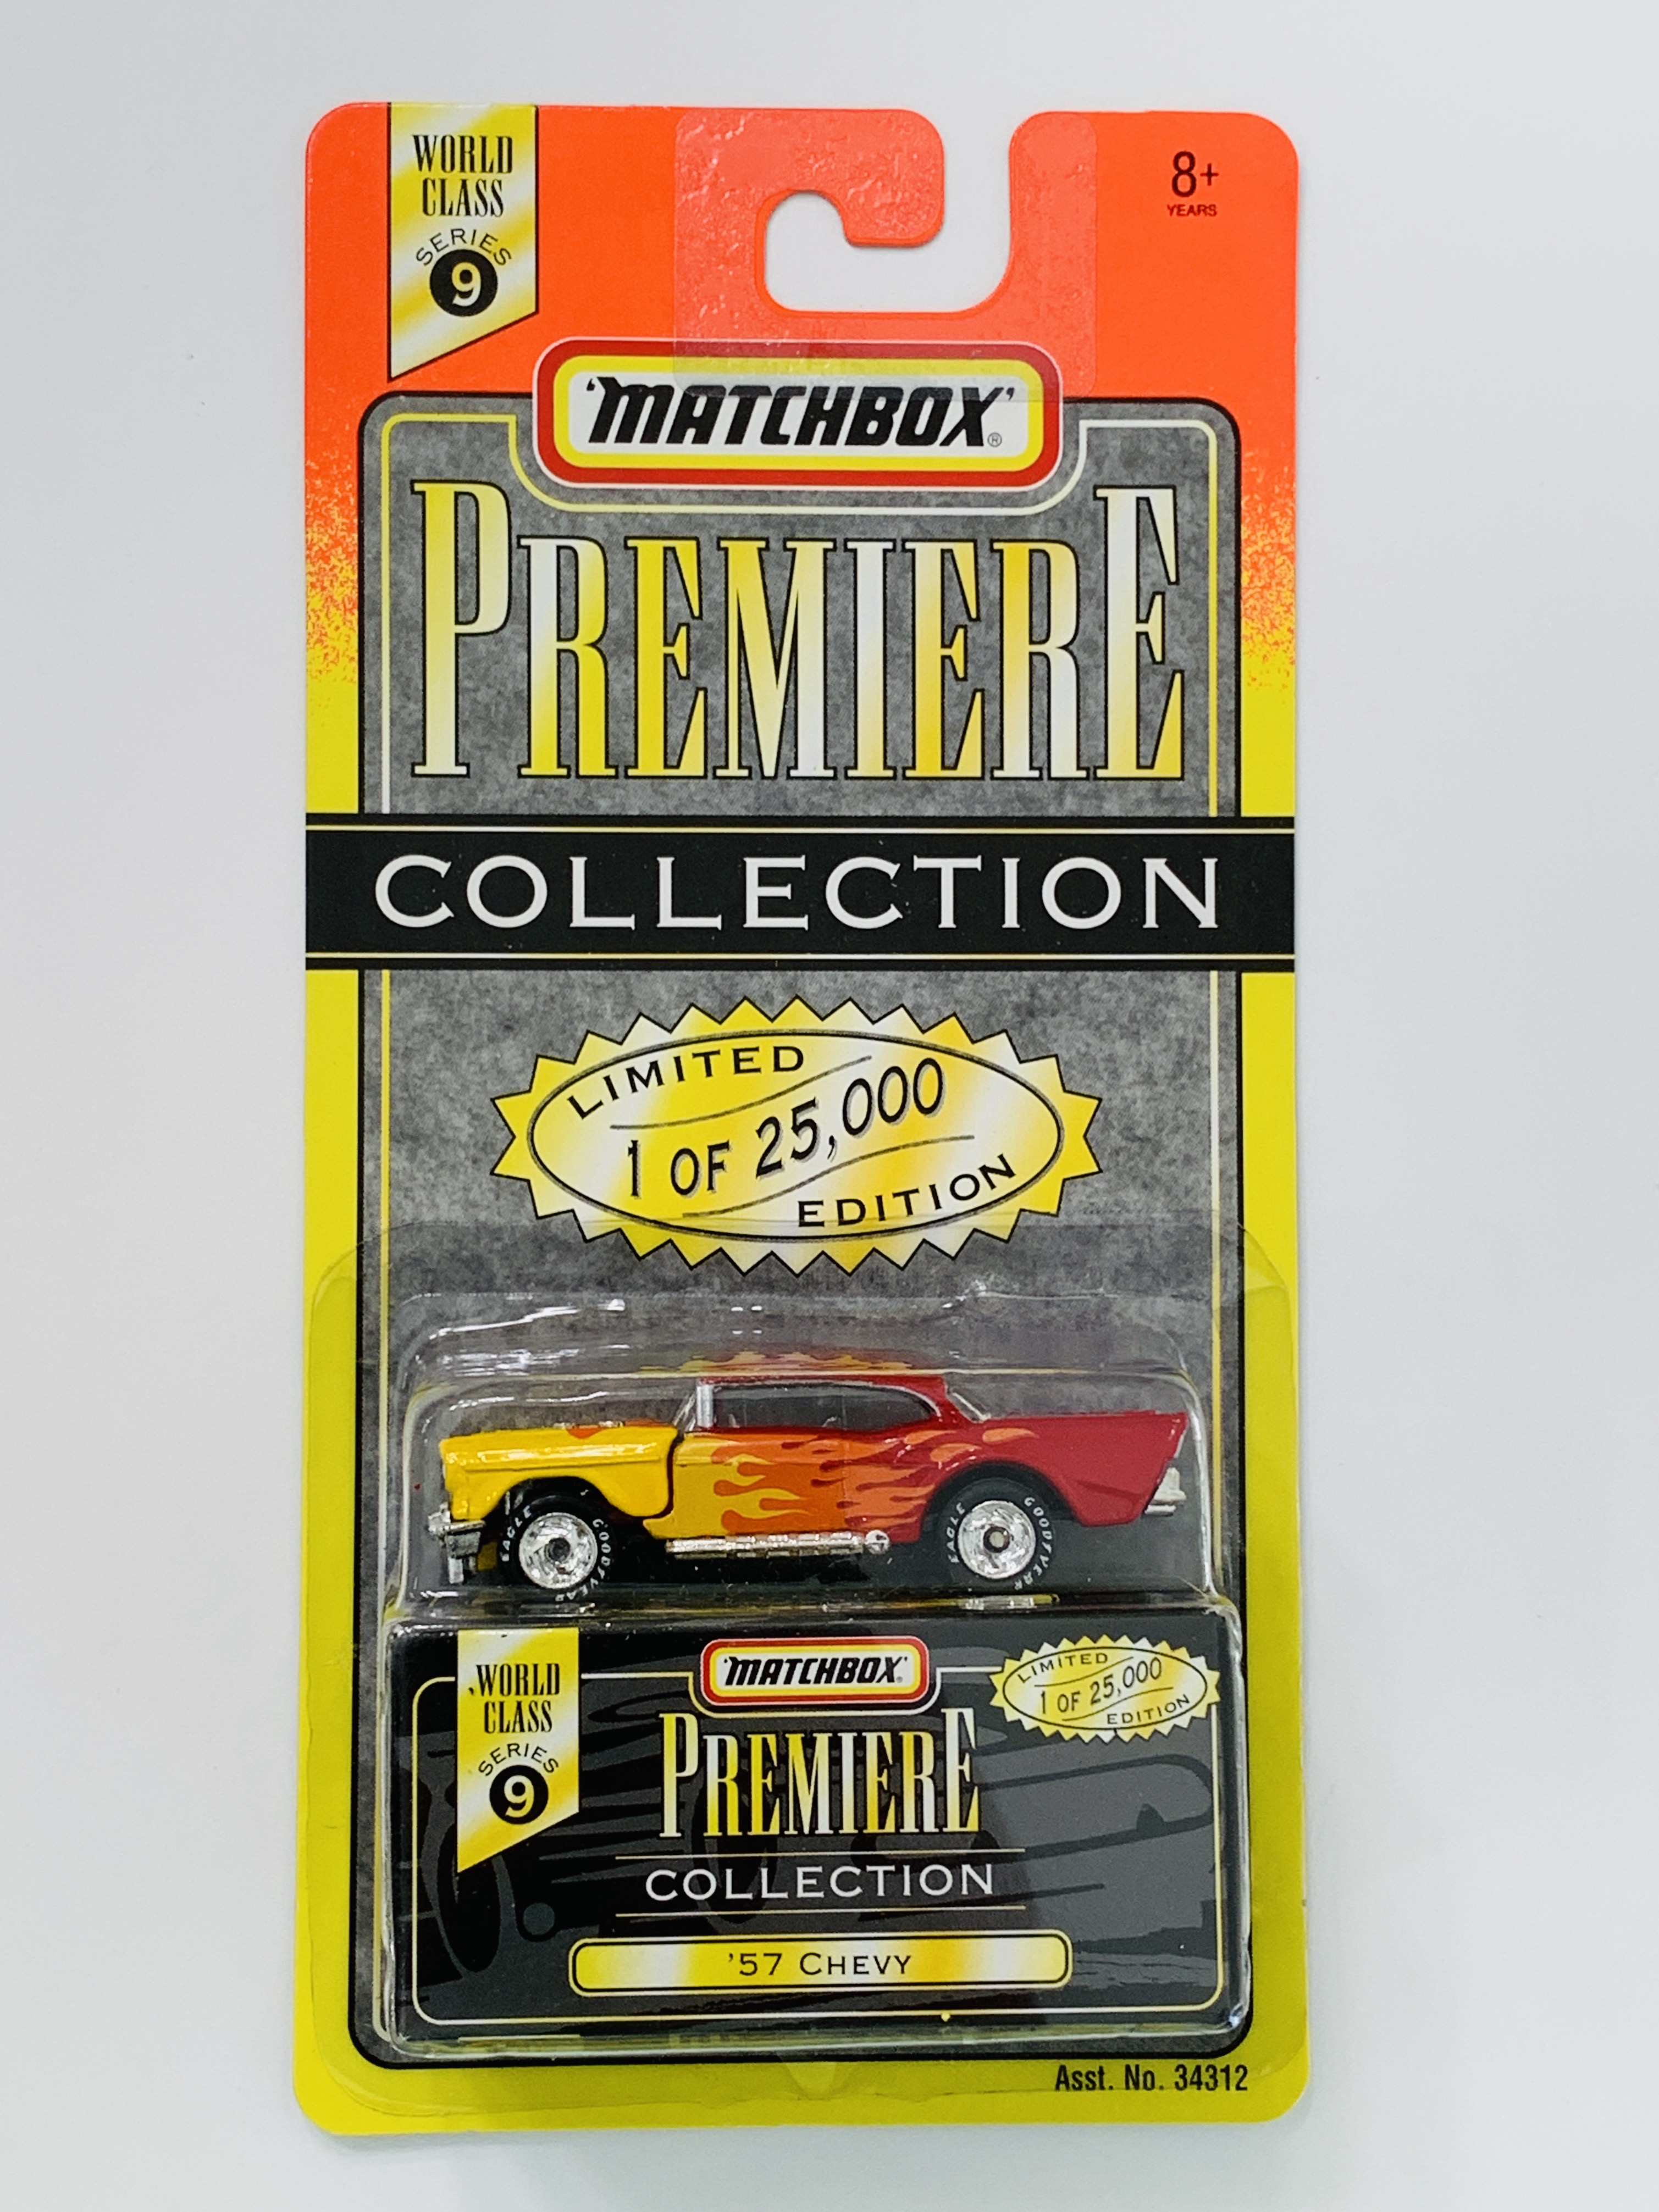 Matchbox Premiere World Class Series 9 '57 Chevy